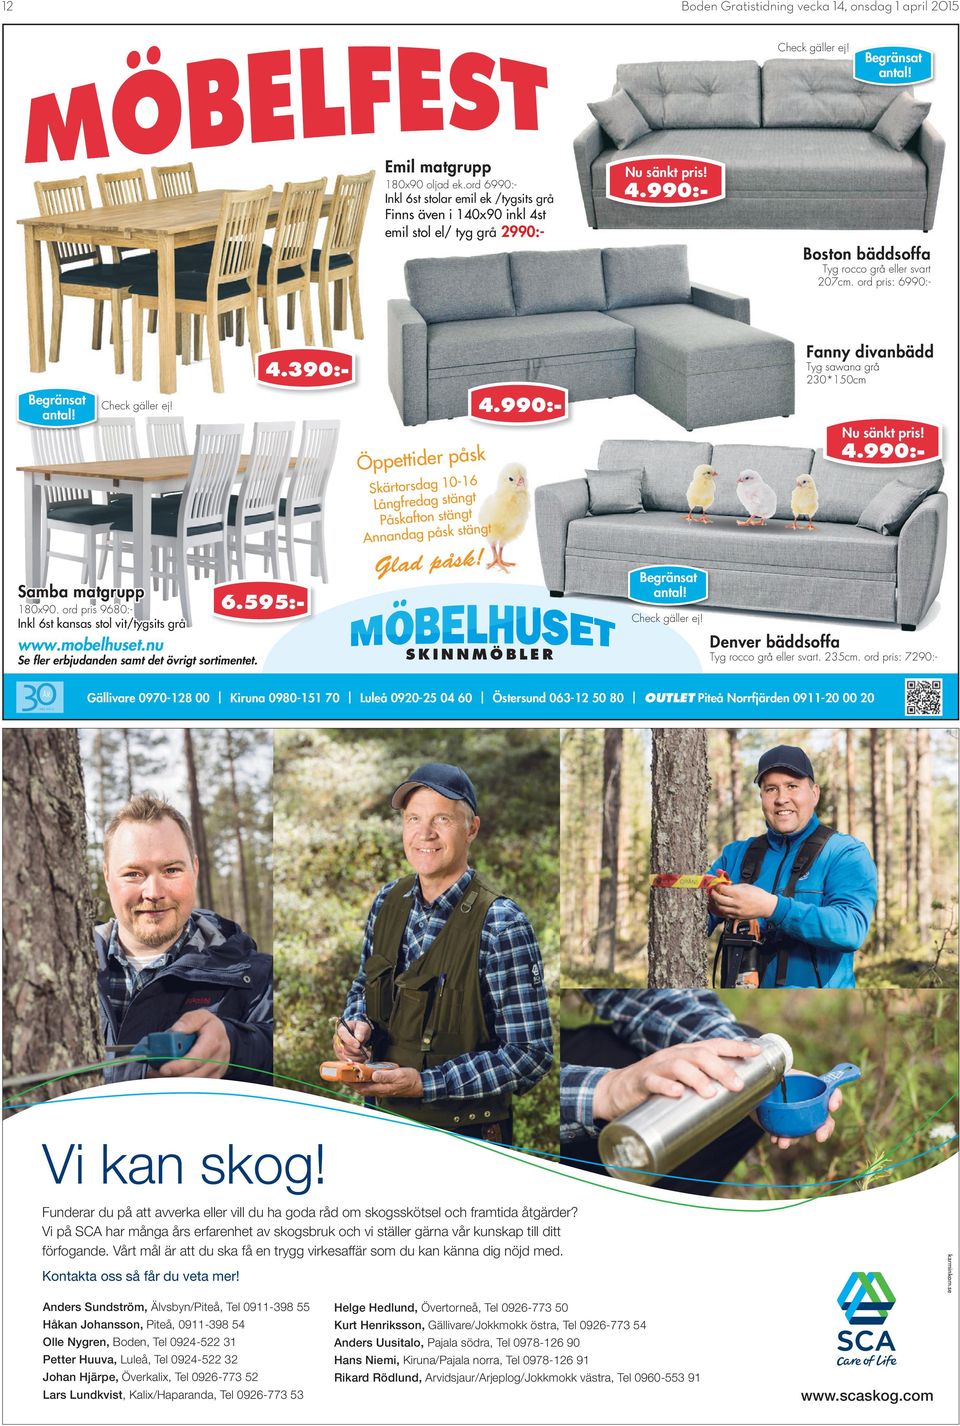 ord 6990:- Inkl 6st stolar emil ek /tygsits grå Finns även i 140x90 inkl 4st emil stol el/ tyg grå 2990:- 4.